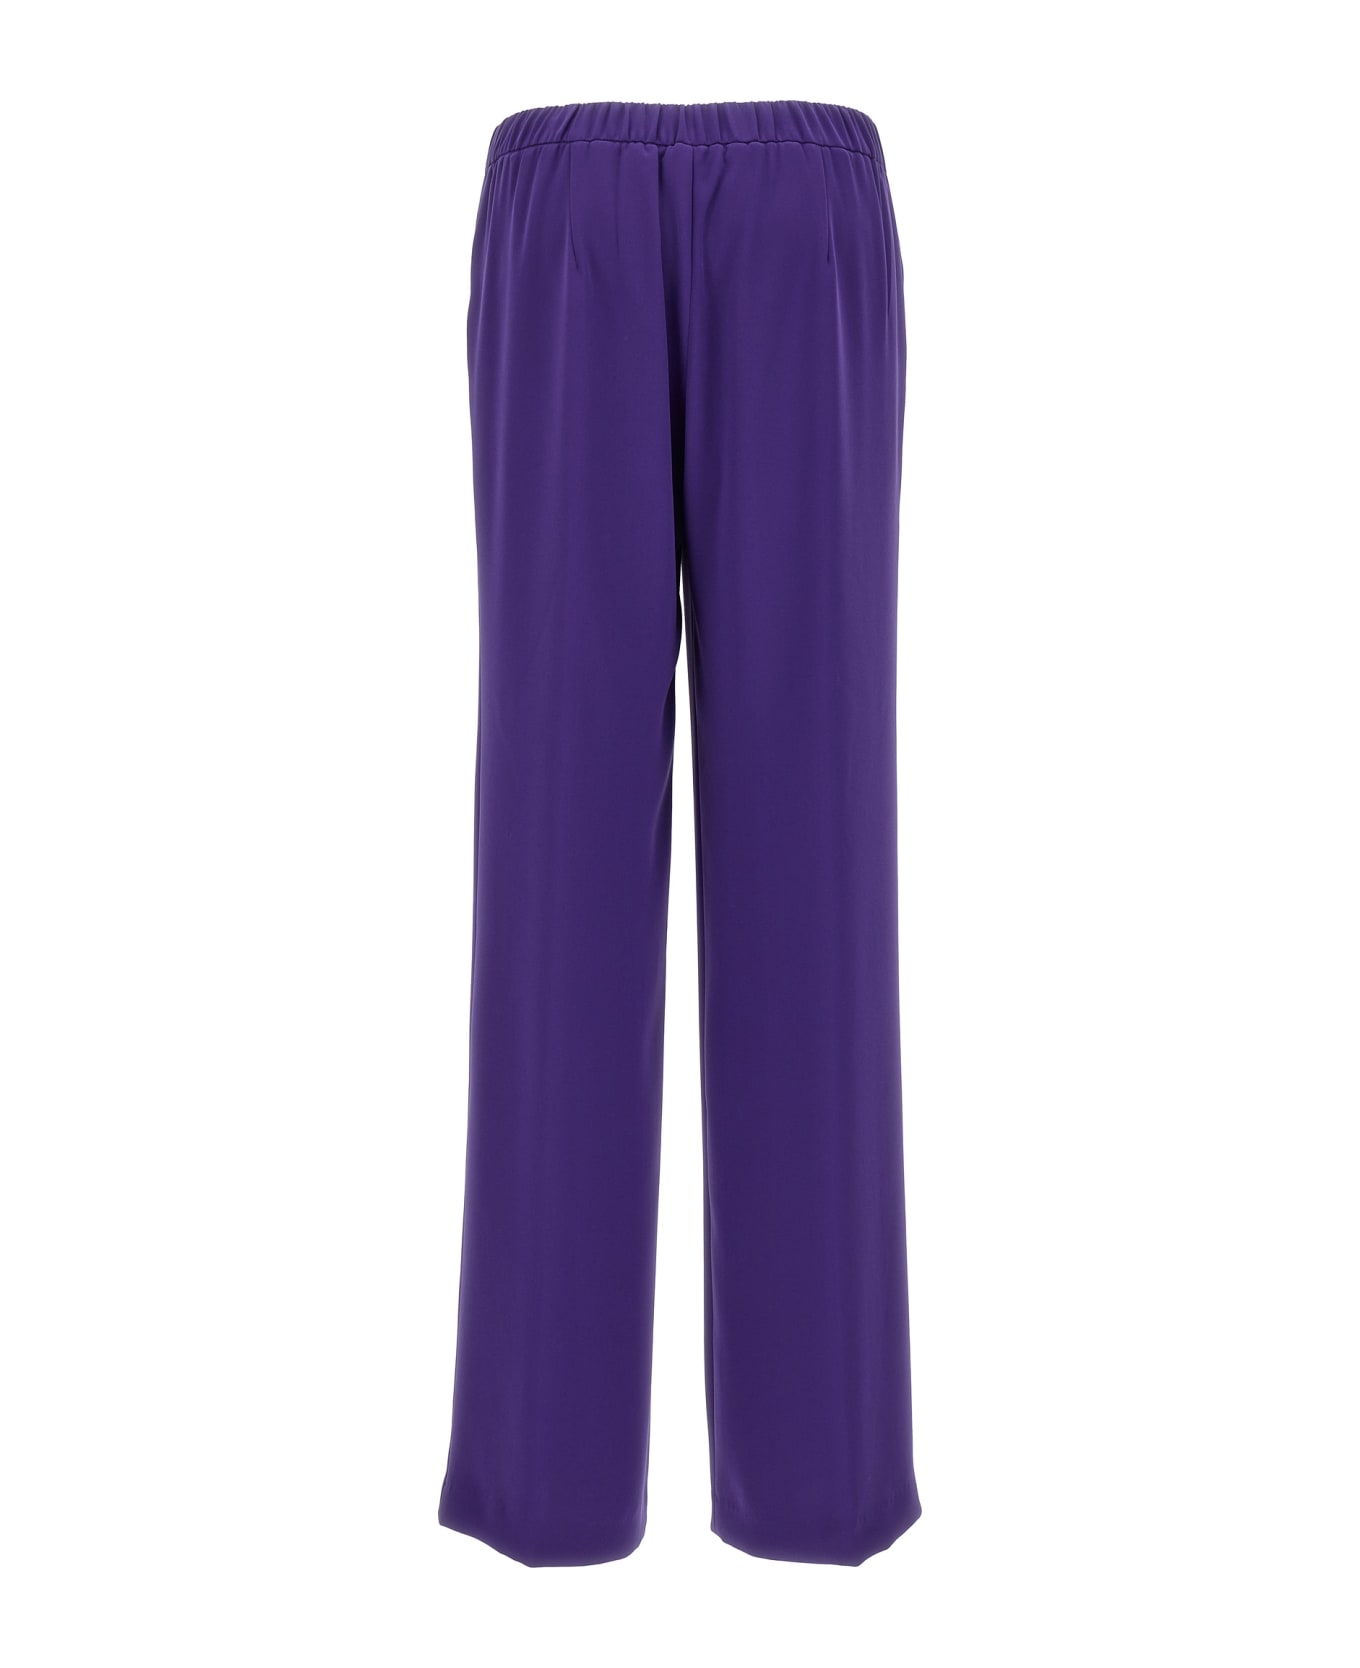 Parosh Cady Pants - Purple